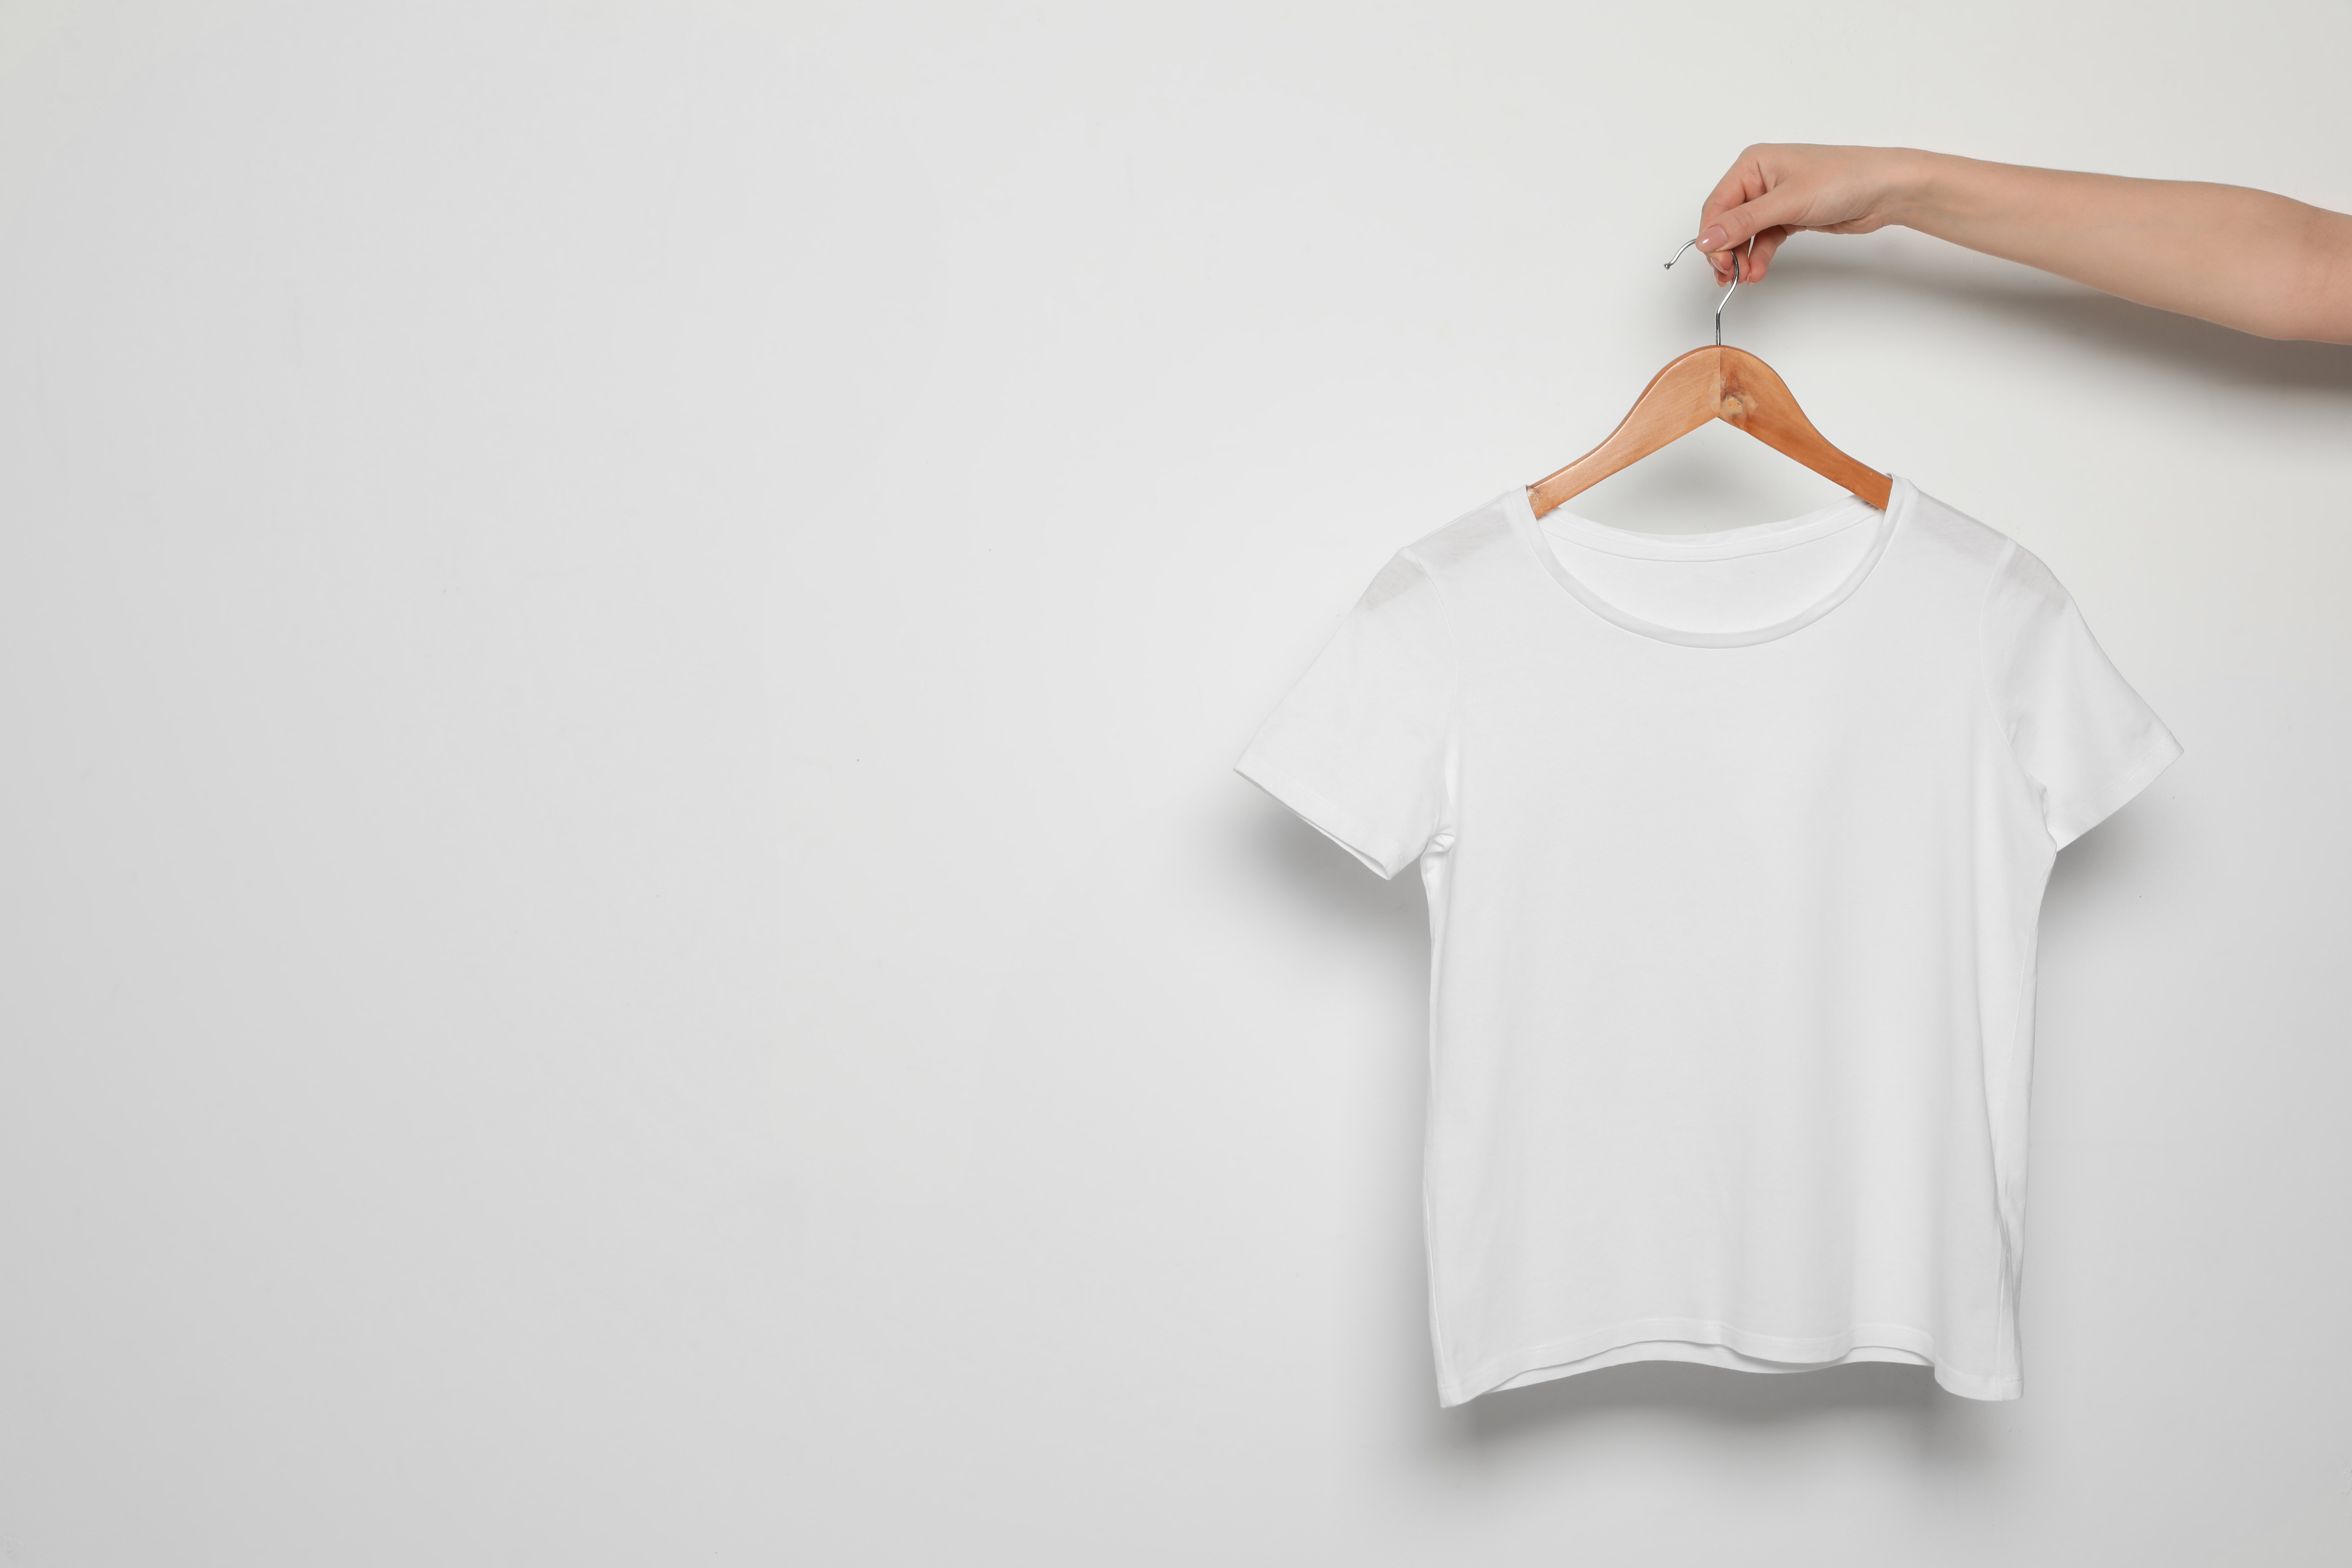 Camiseta de algodón. | Foto: Shutterstock